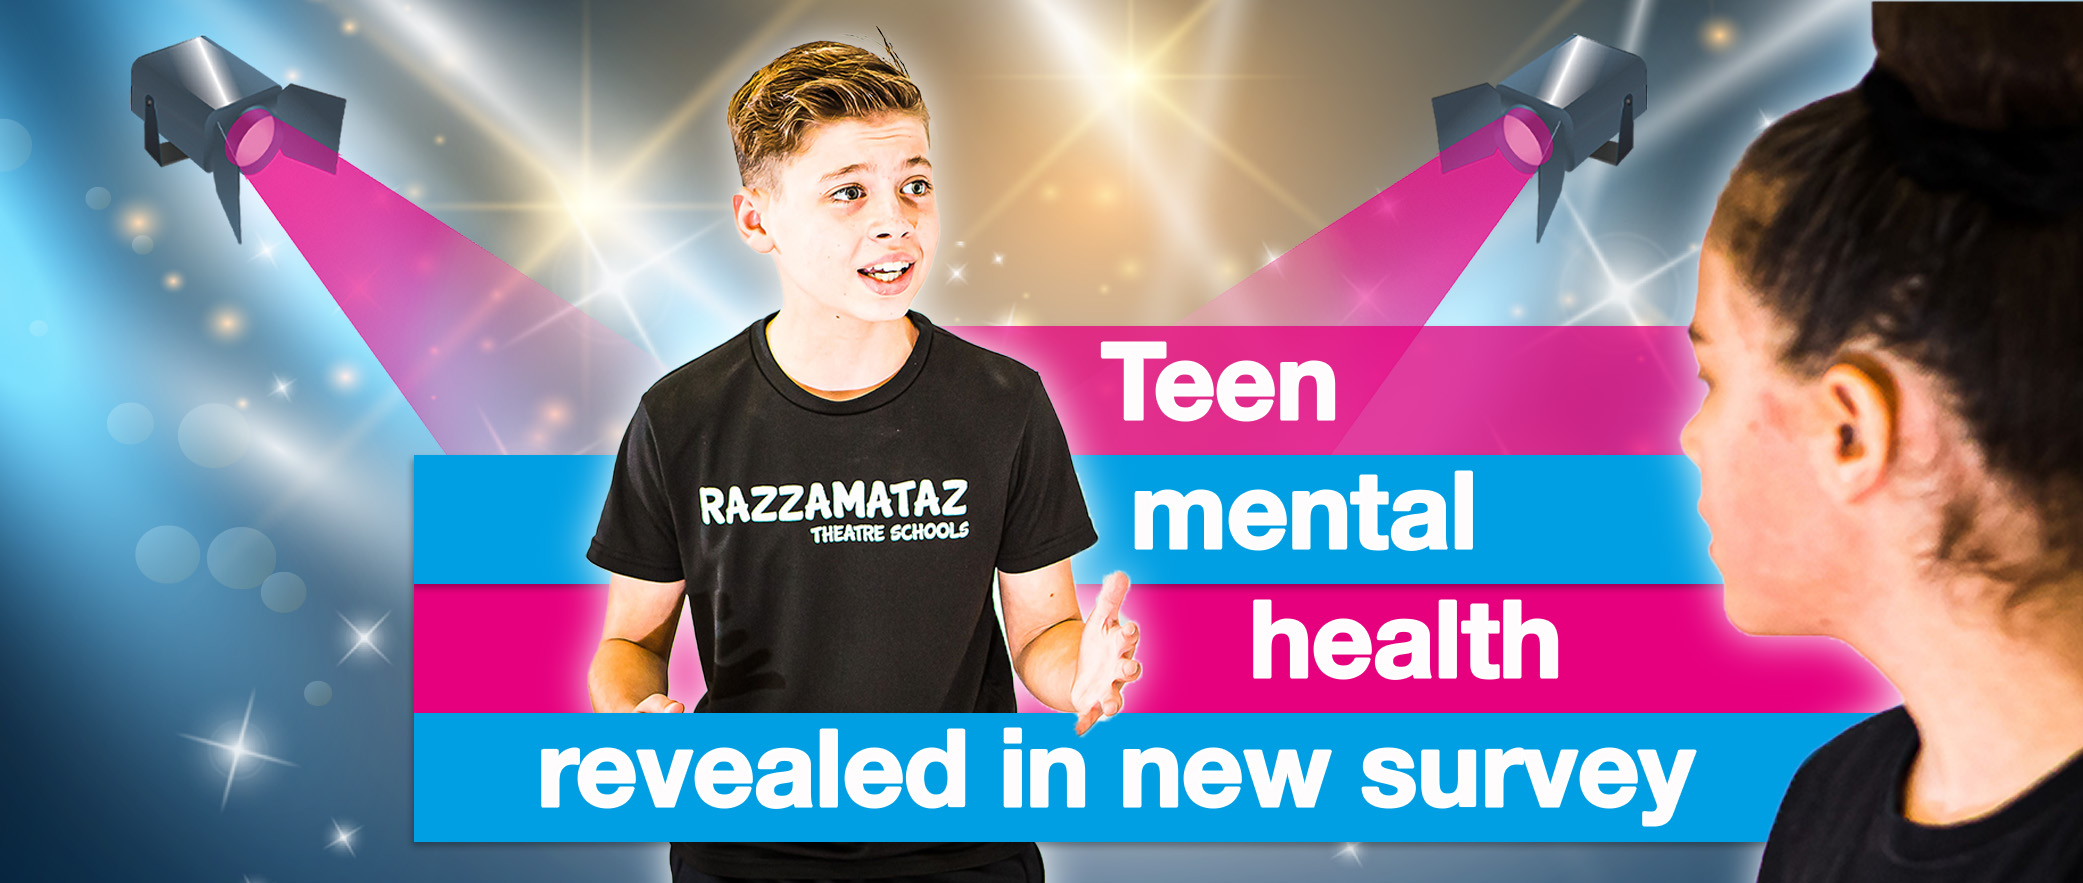 Teen mental health revealed in new survey